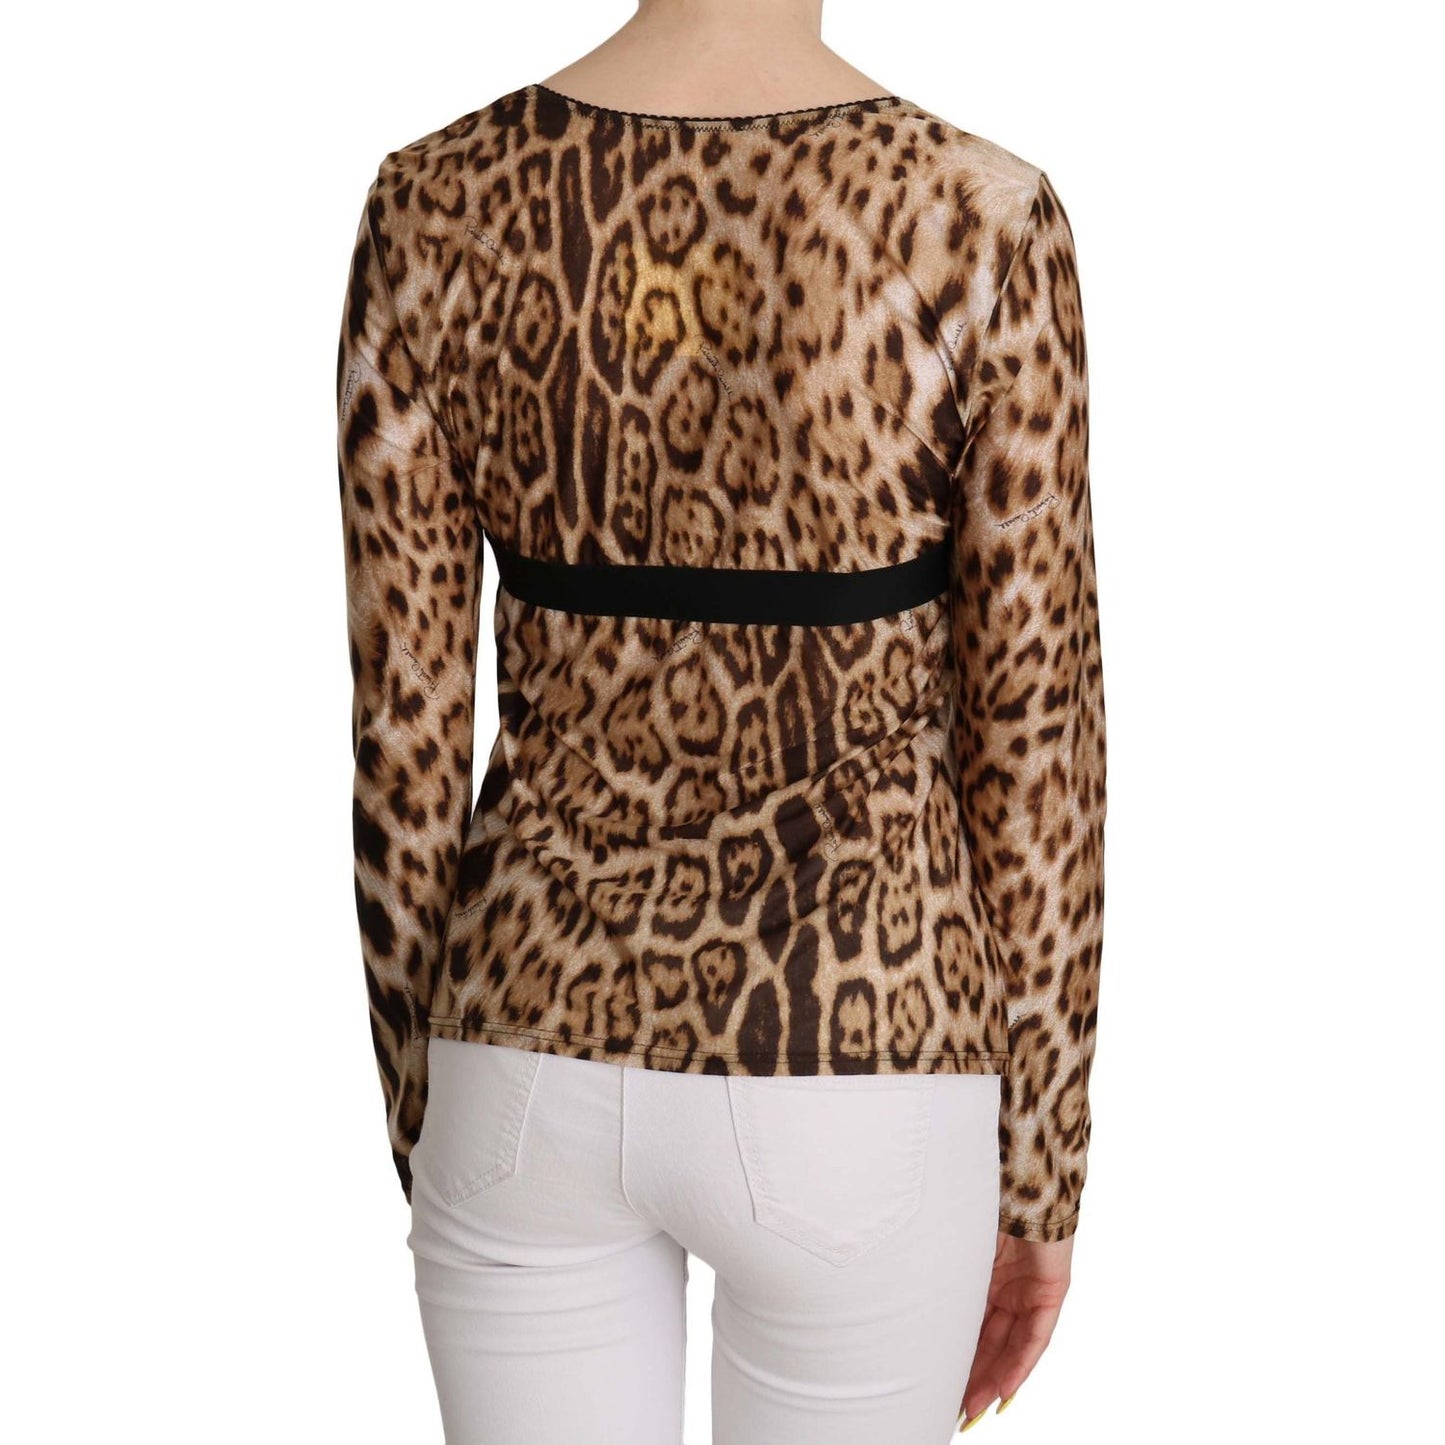 Roberto Cavalli Elegant Leopard Long Sleeve Top brown-round-neck-leopard-women-top-blouse IMG_0394-2-scaled-c58ae7b7-5db.jpg